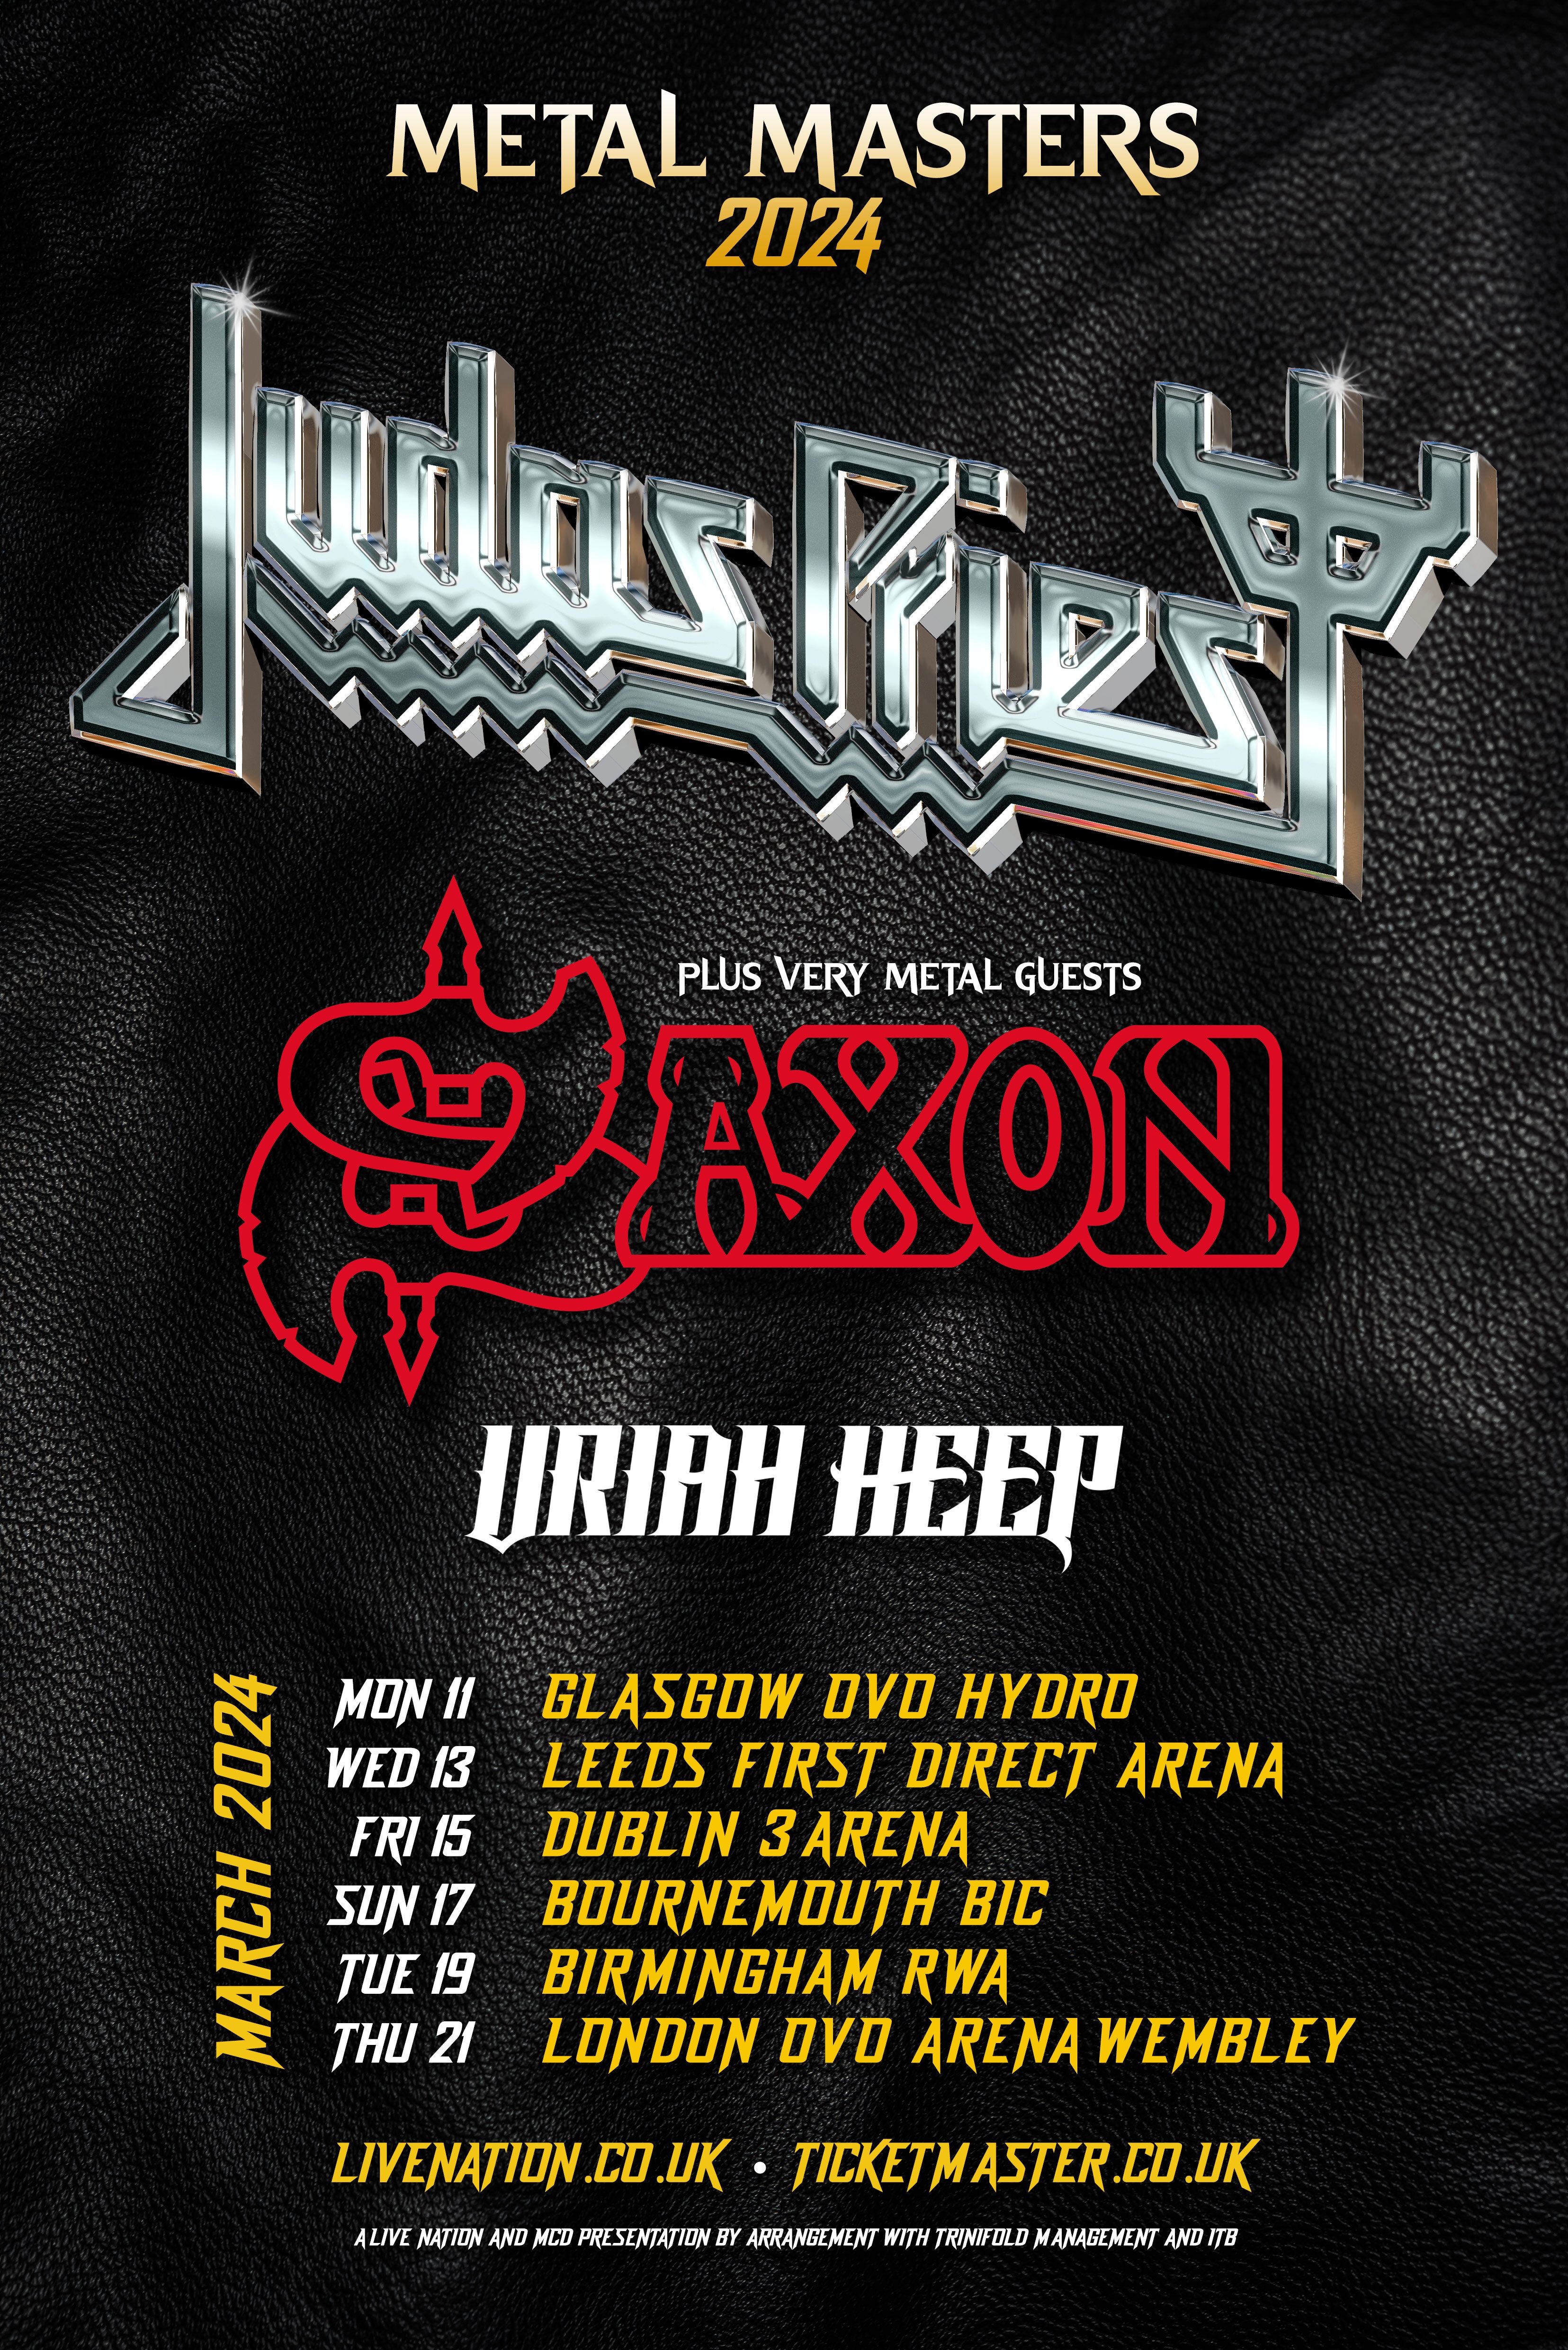 Judas Priest Announce Metal Masters 2024 Tour Dates